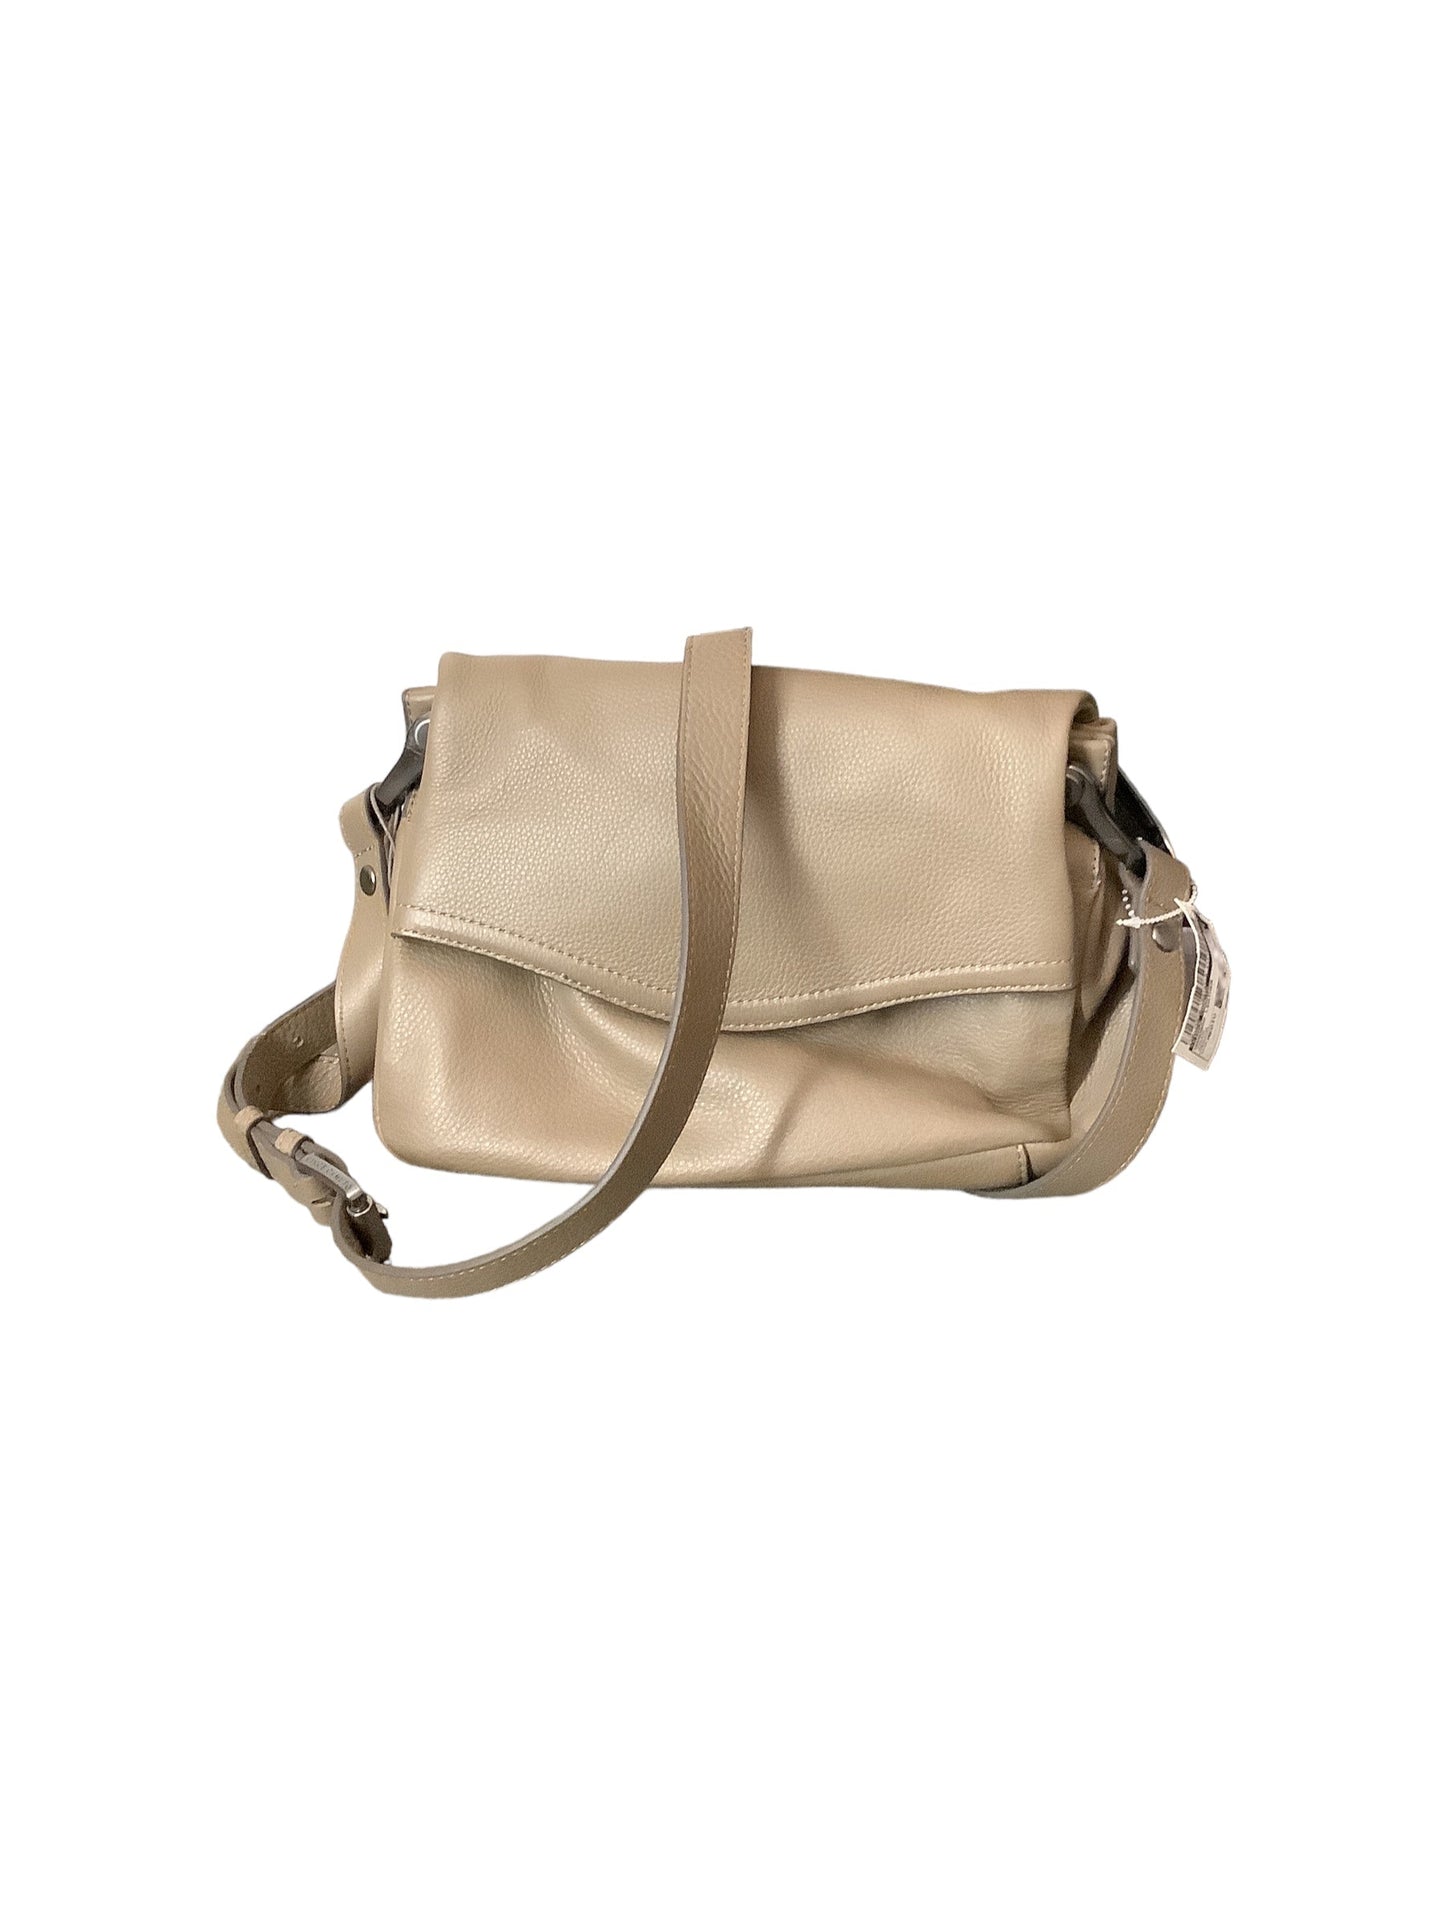 Handbag Leather Vince Camuto, Size Medium